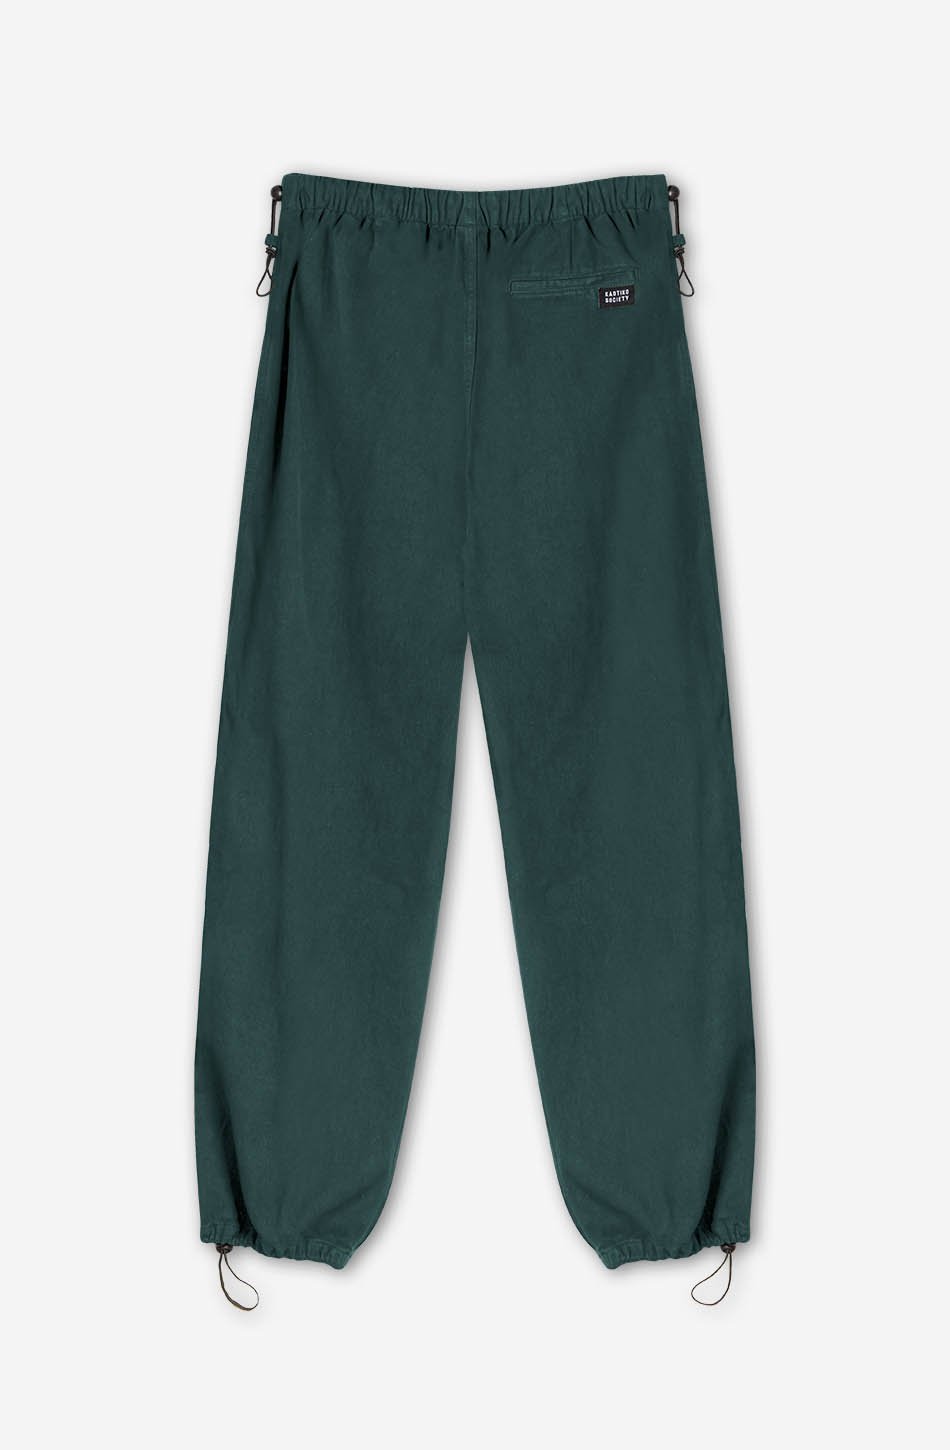 Green Parachute Trousers